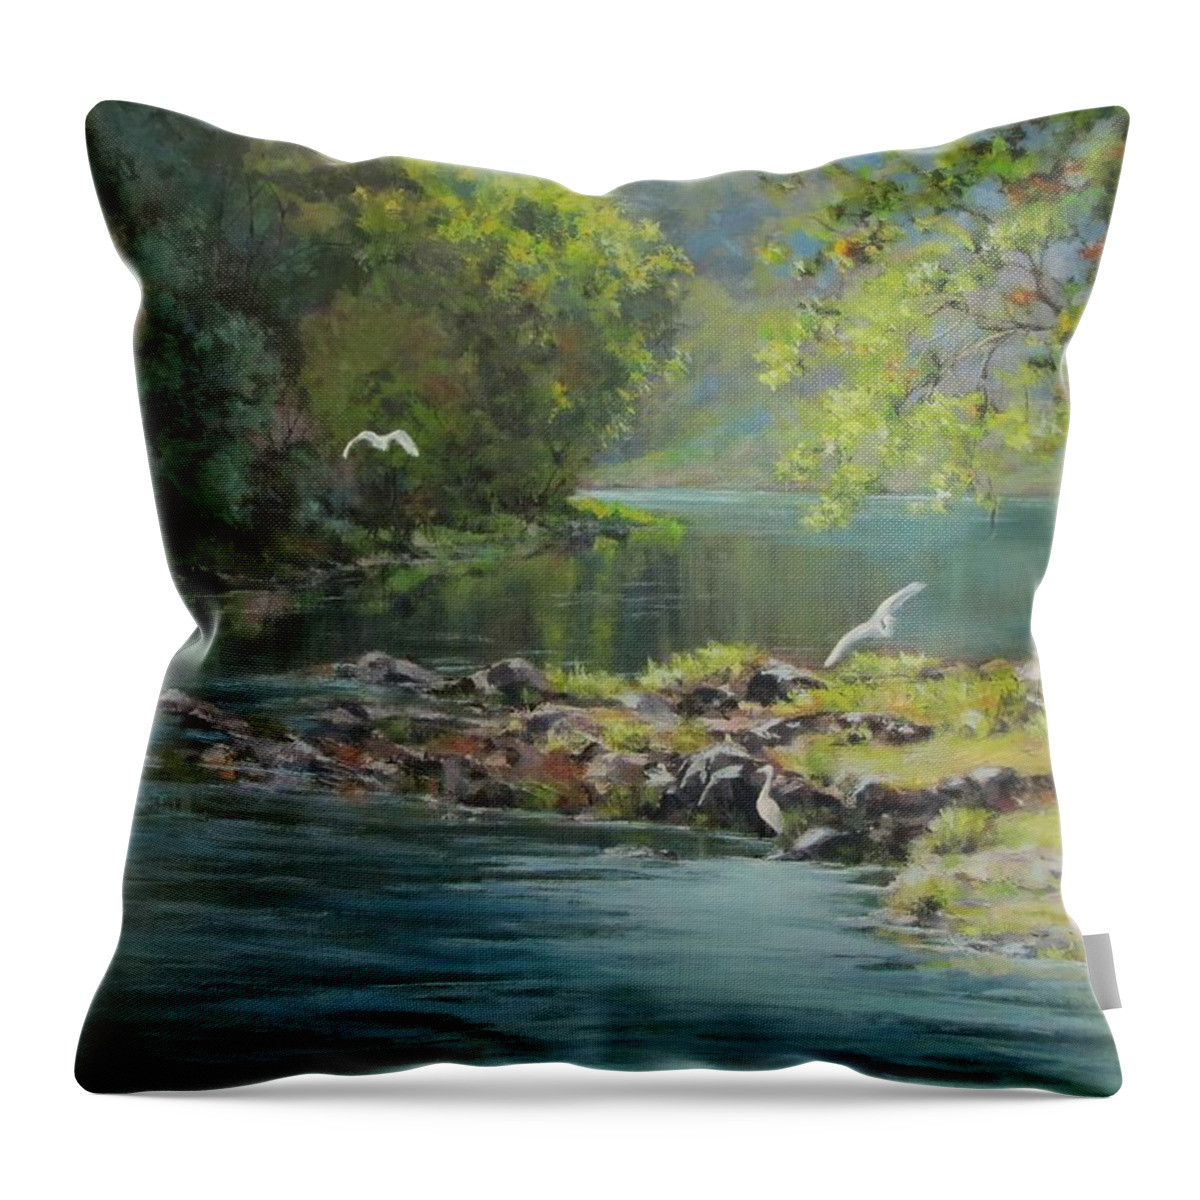 Acrylic Throw Pillow featuring the painting Morning Gathering by Karen Ilari